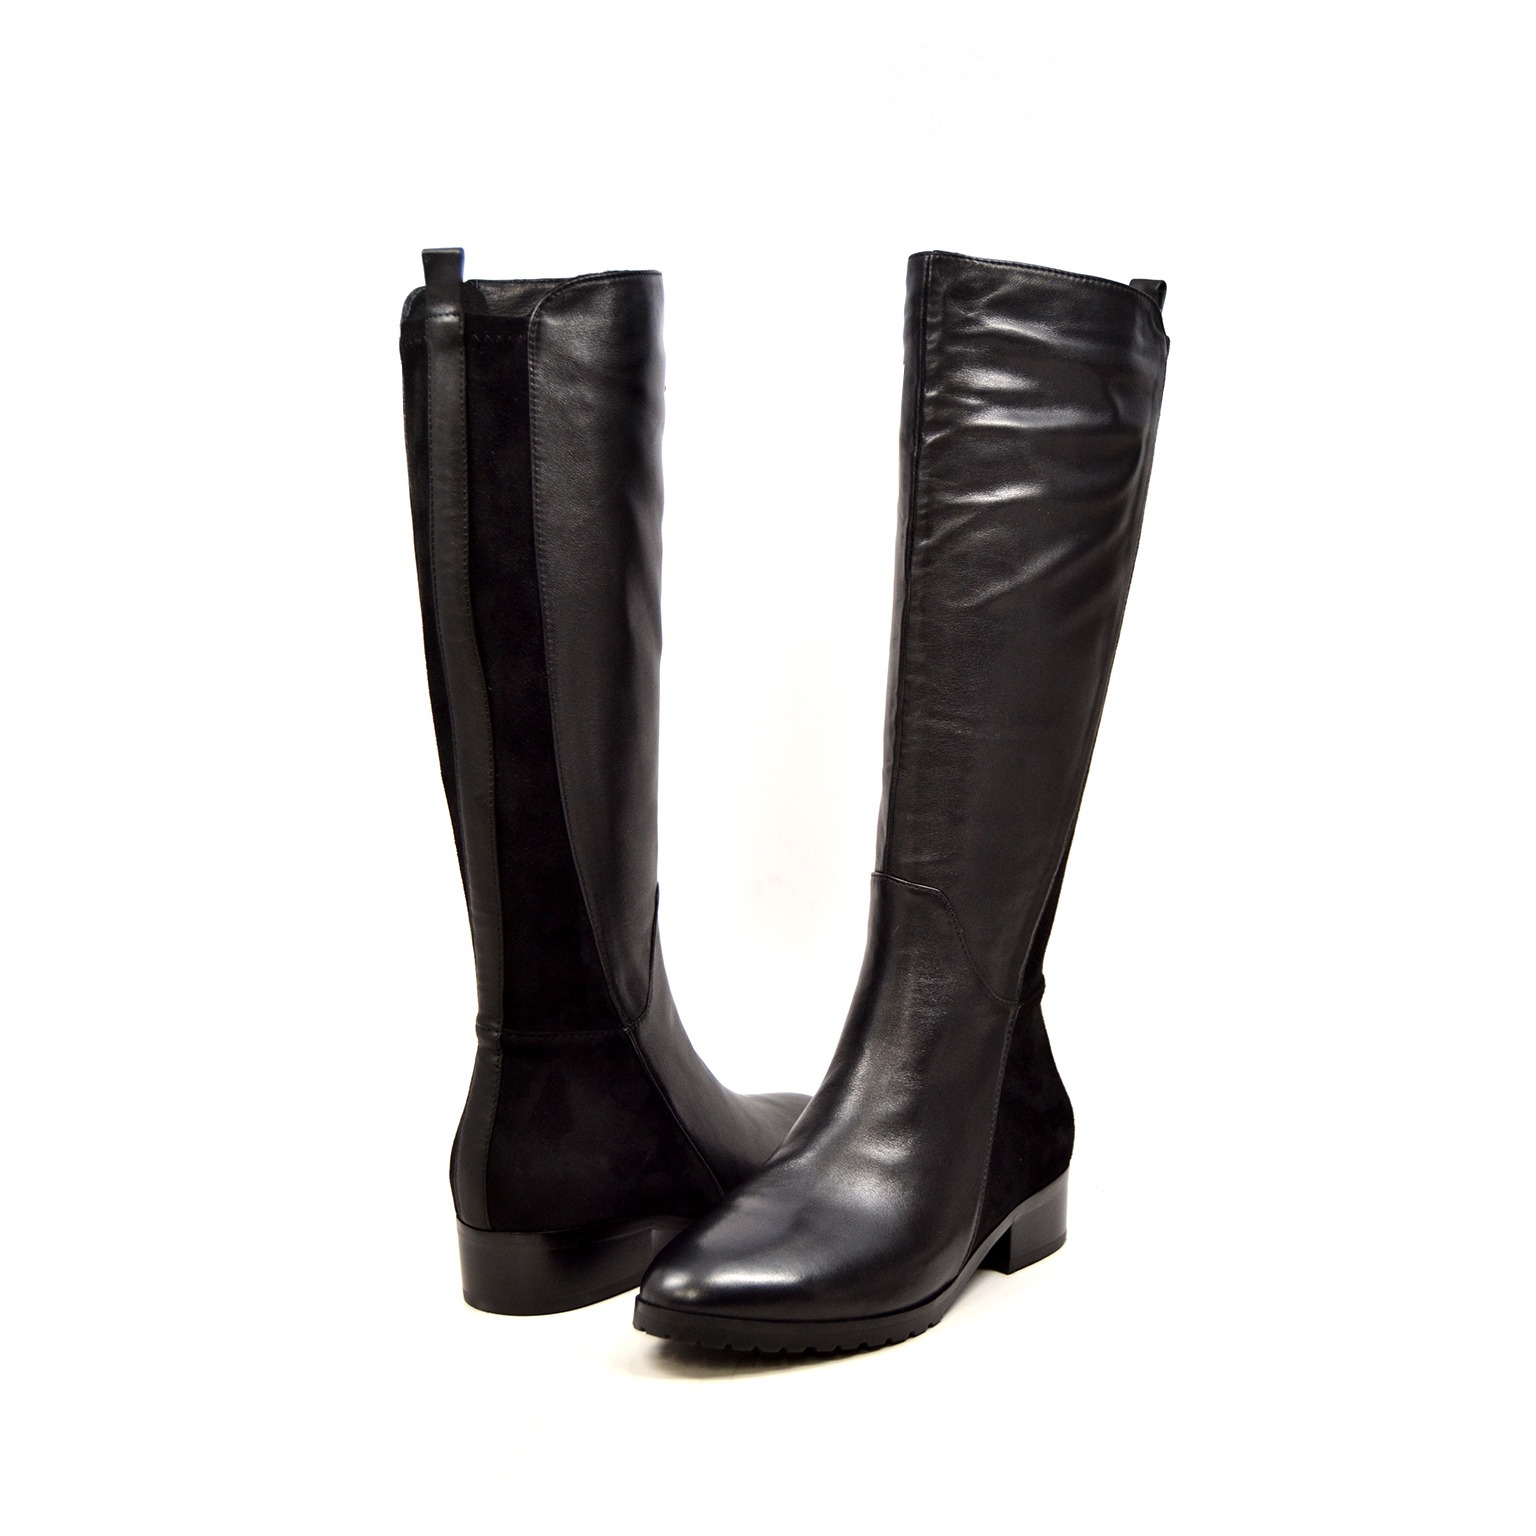 slim calf boots for women